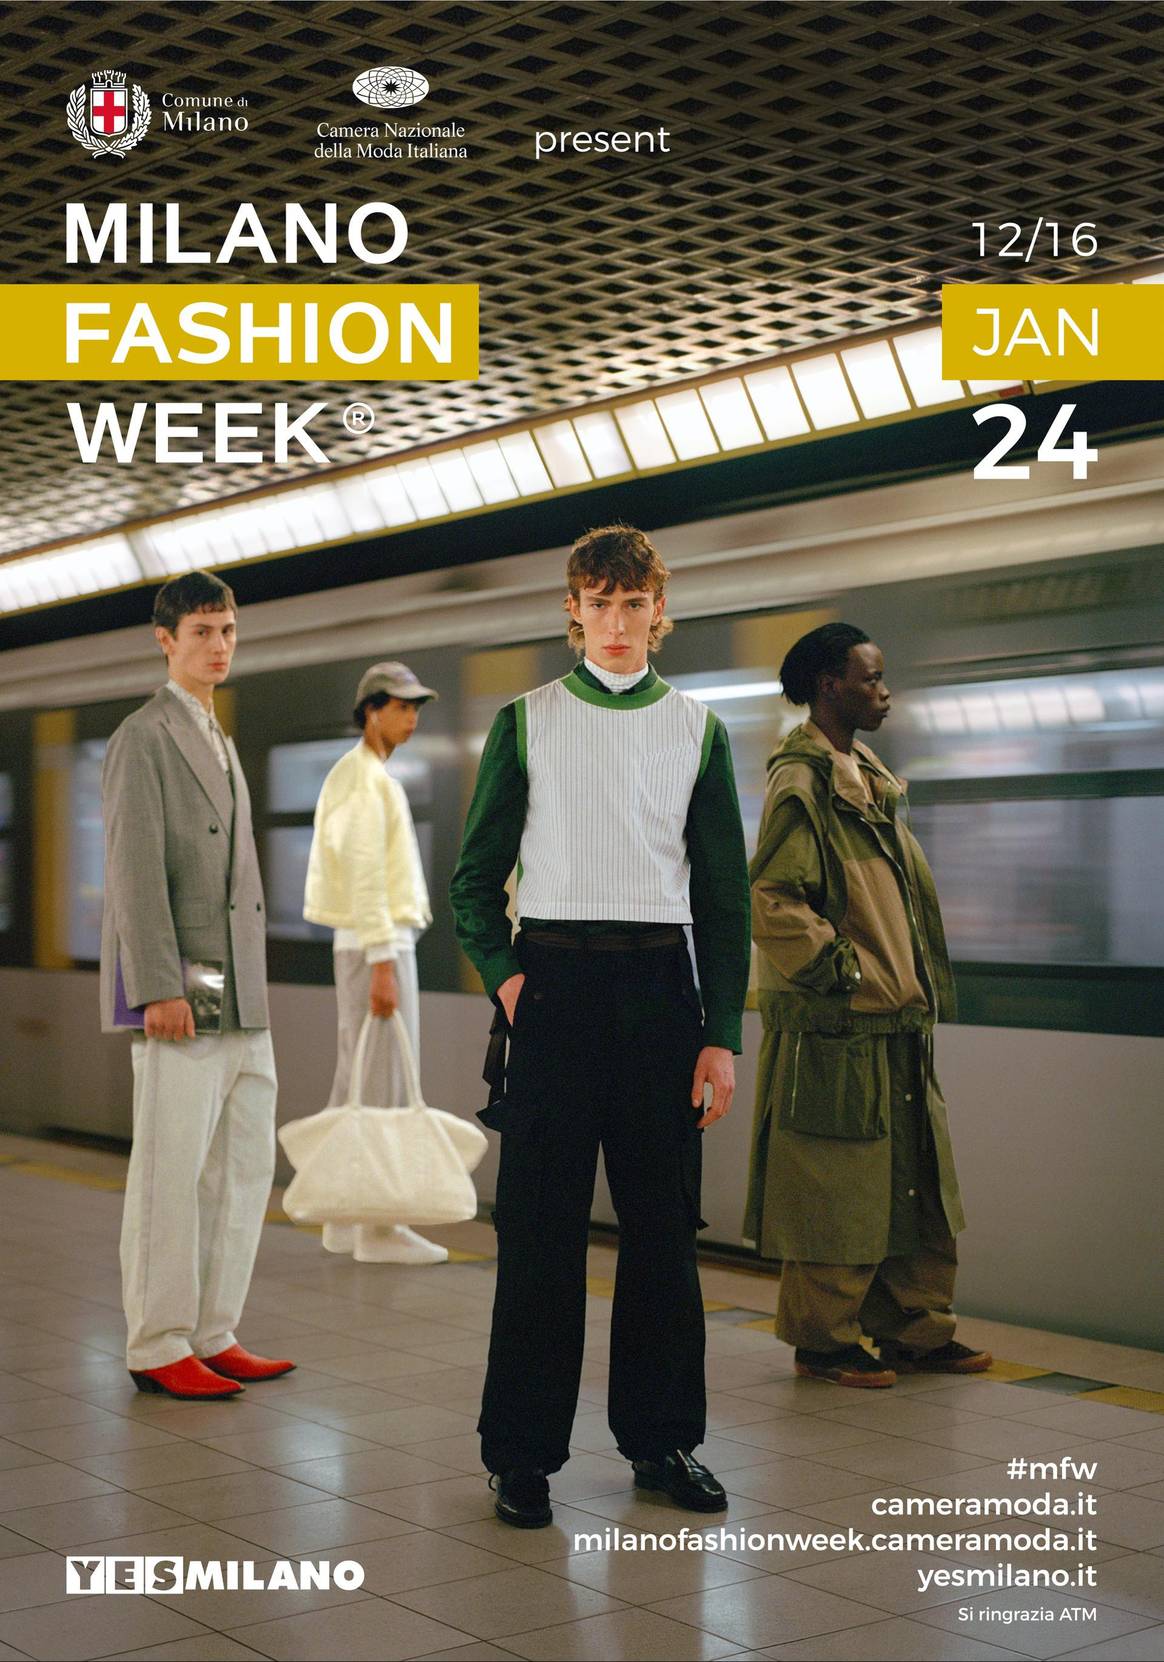 La fashion week dedicata all'uomo parte il 12 gennaio